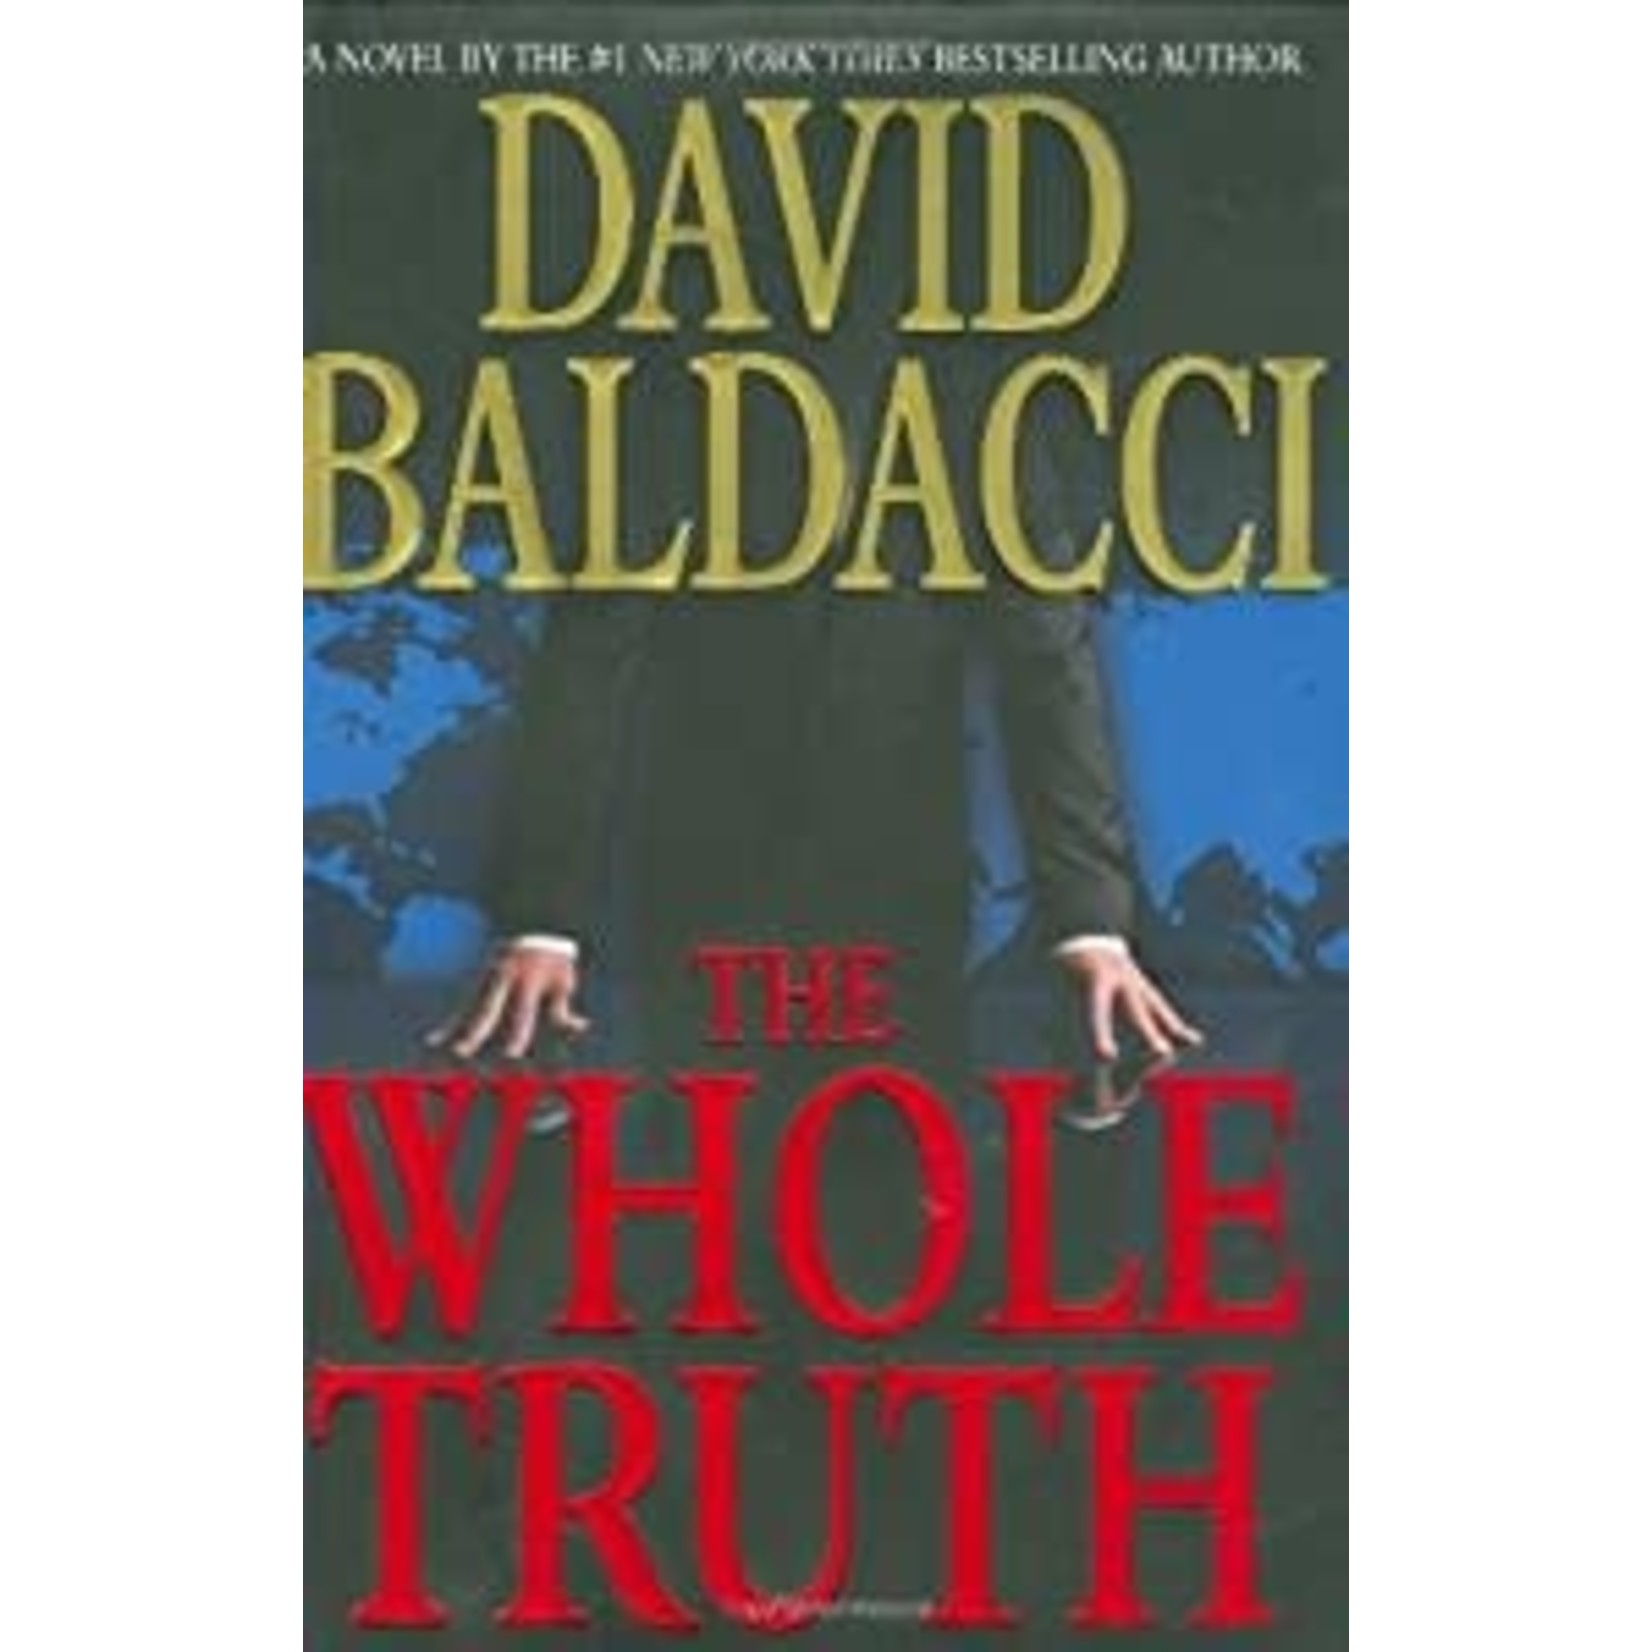 Baldacci, David Baldacci, David - The Whole Truth (Hardcover)